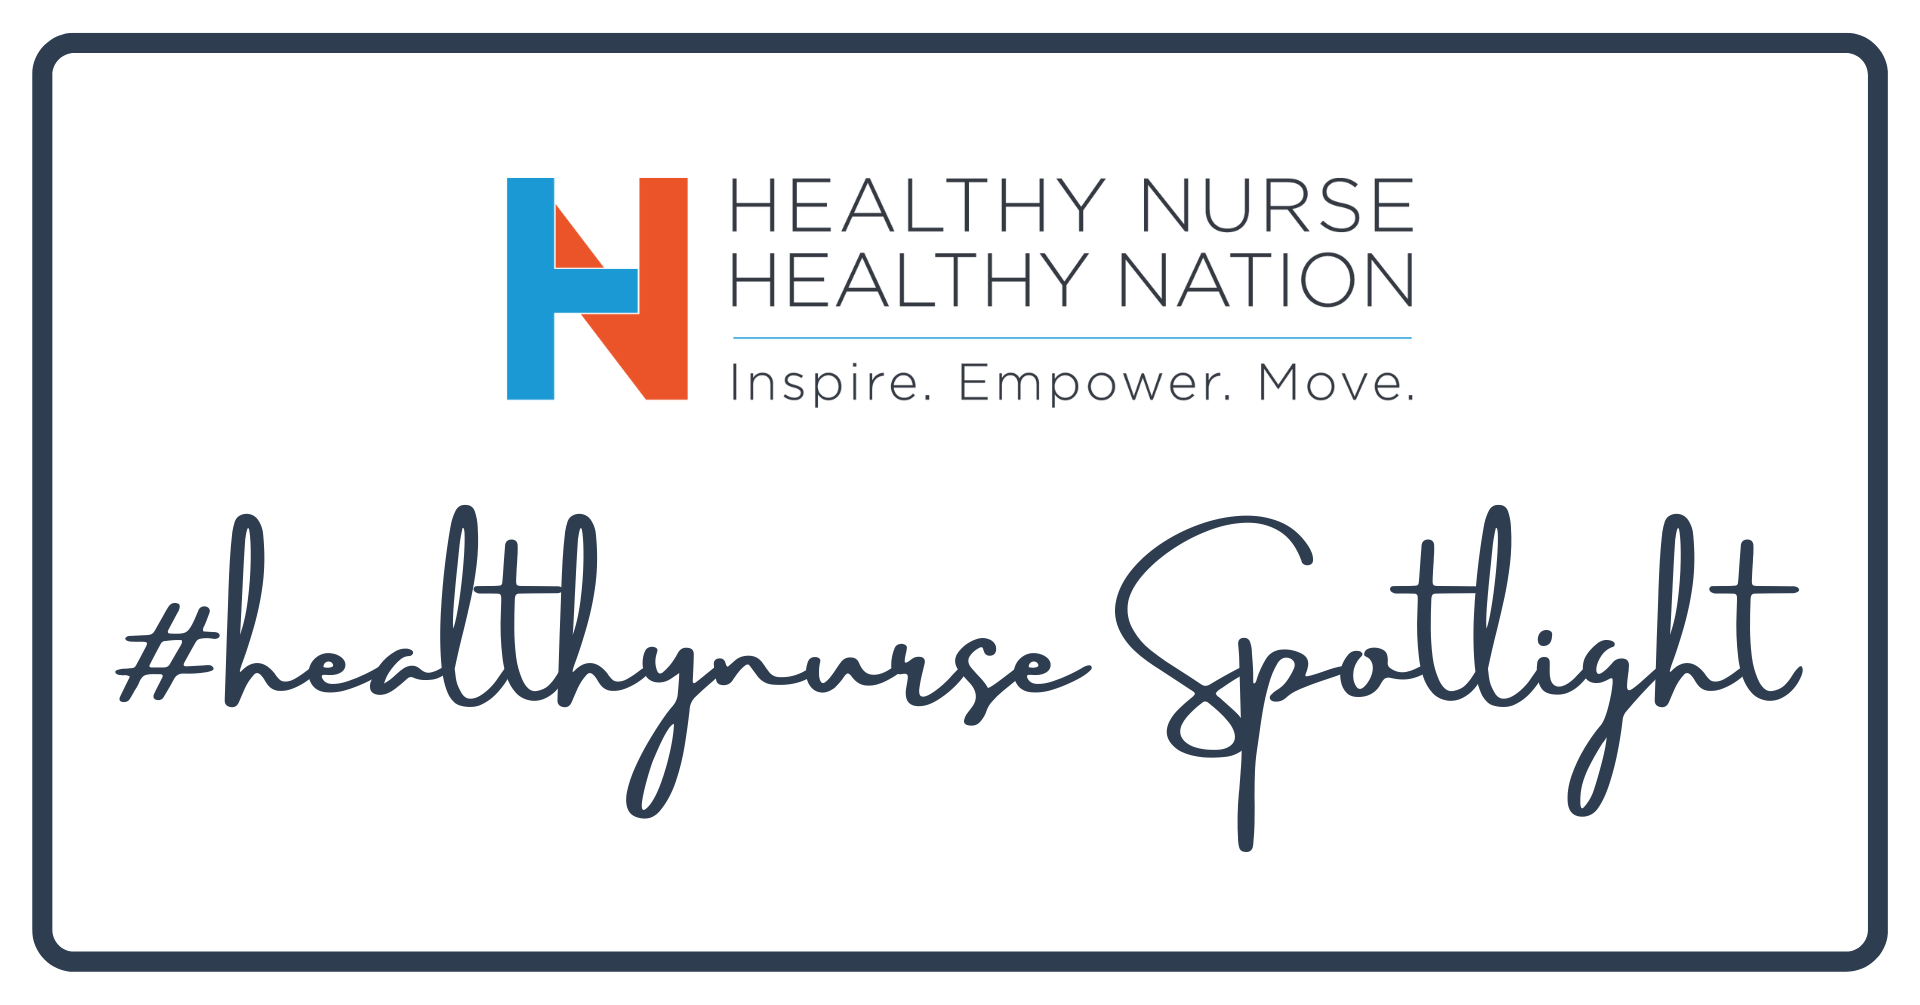 Healthy Nurse, Healthy Nation™ - #healthynurse Spotlight Series - Karen Laing, MS, BSN, RN, HWNC-BC, CHES, DipACLM 4105